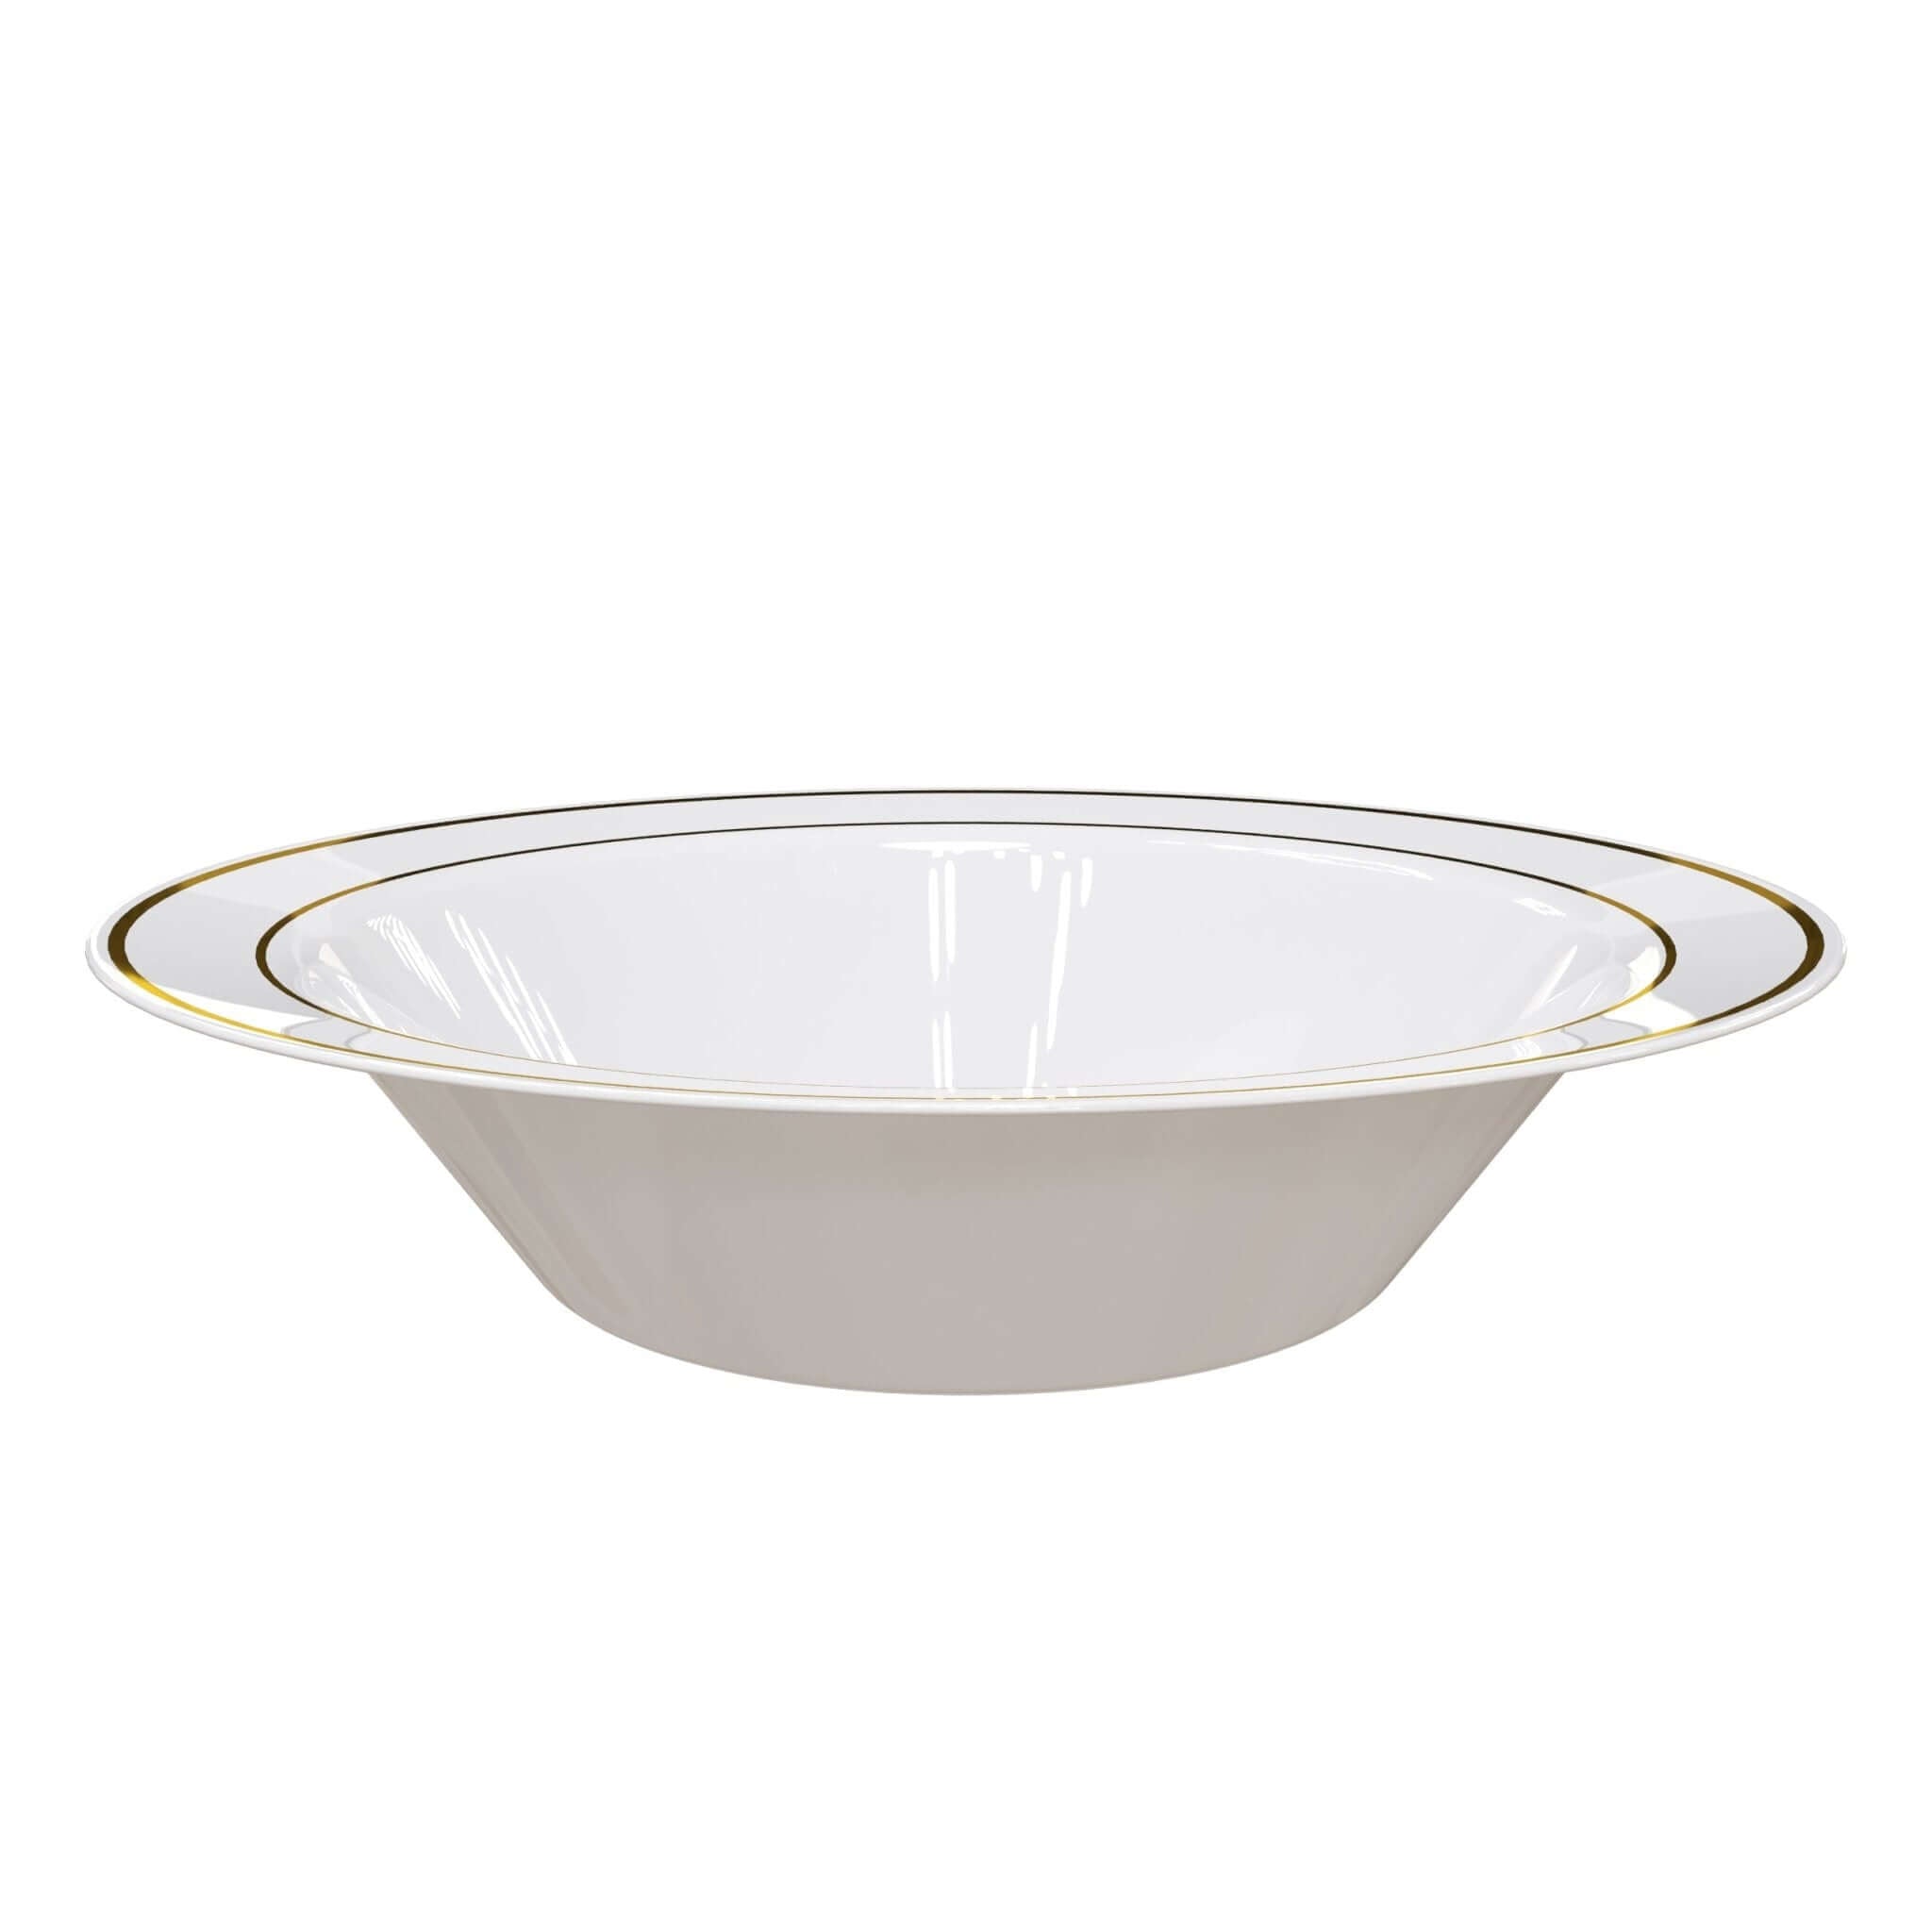 14 oz. Gold Line Design Plastic Bowls (120 Count) - Yom Tov Settings